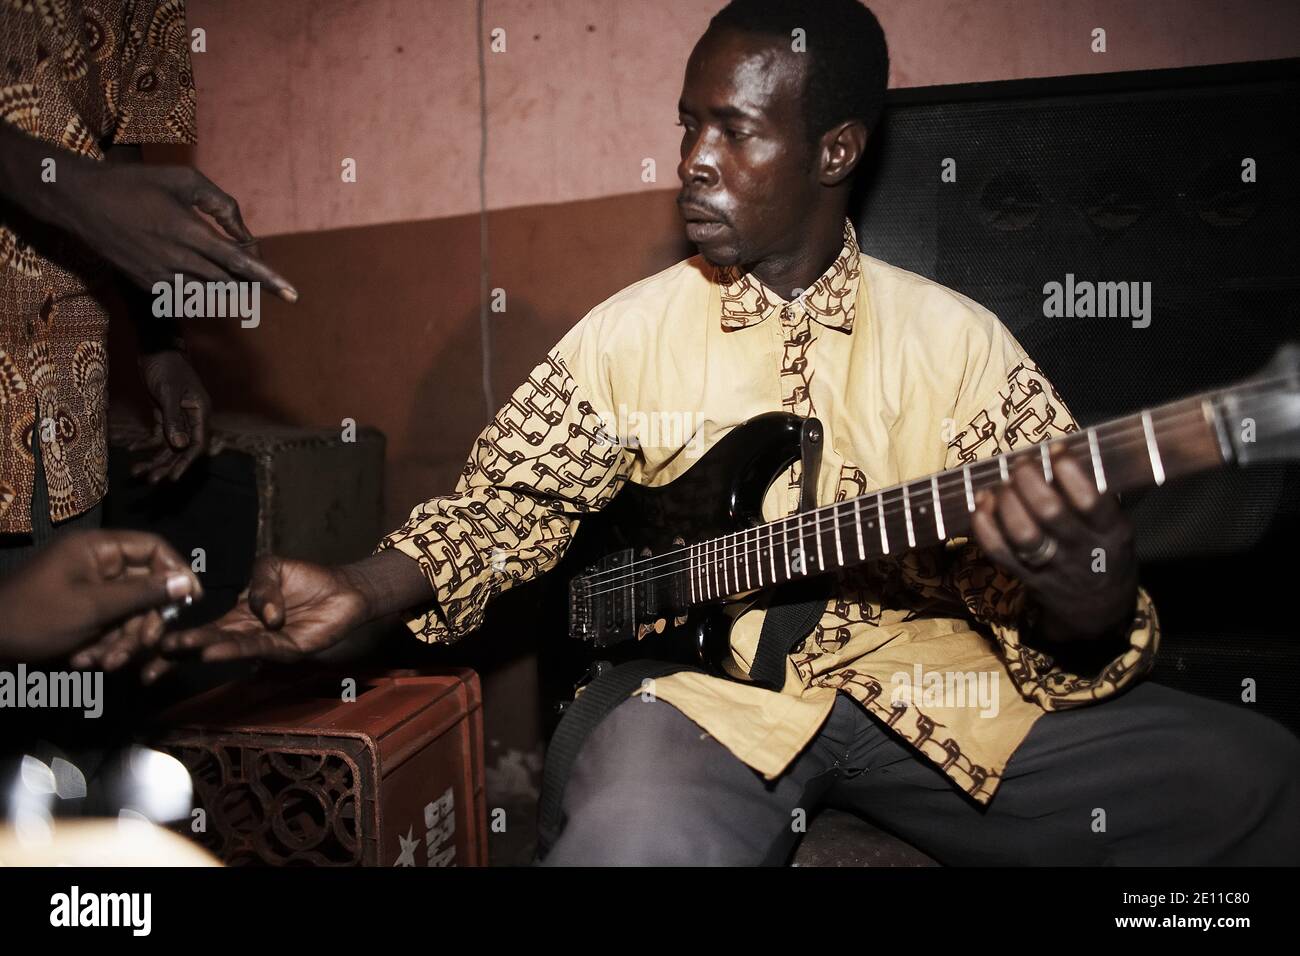 África / Malí / Bamako / Malí capital, tiene una rica escena musical con clubes y vida nocturna. Foto de stock